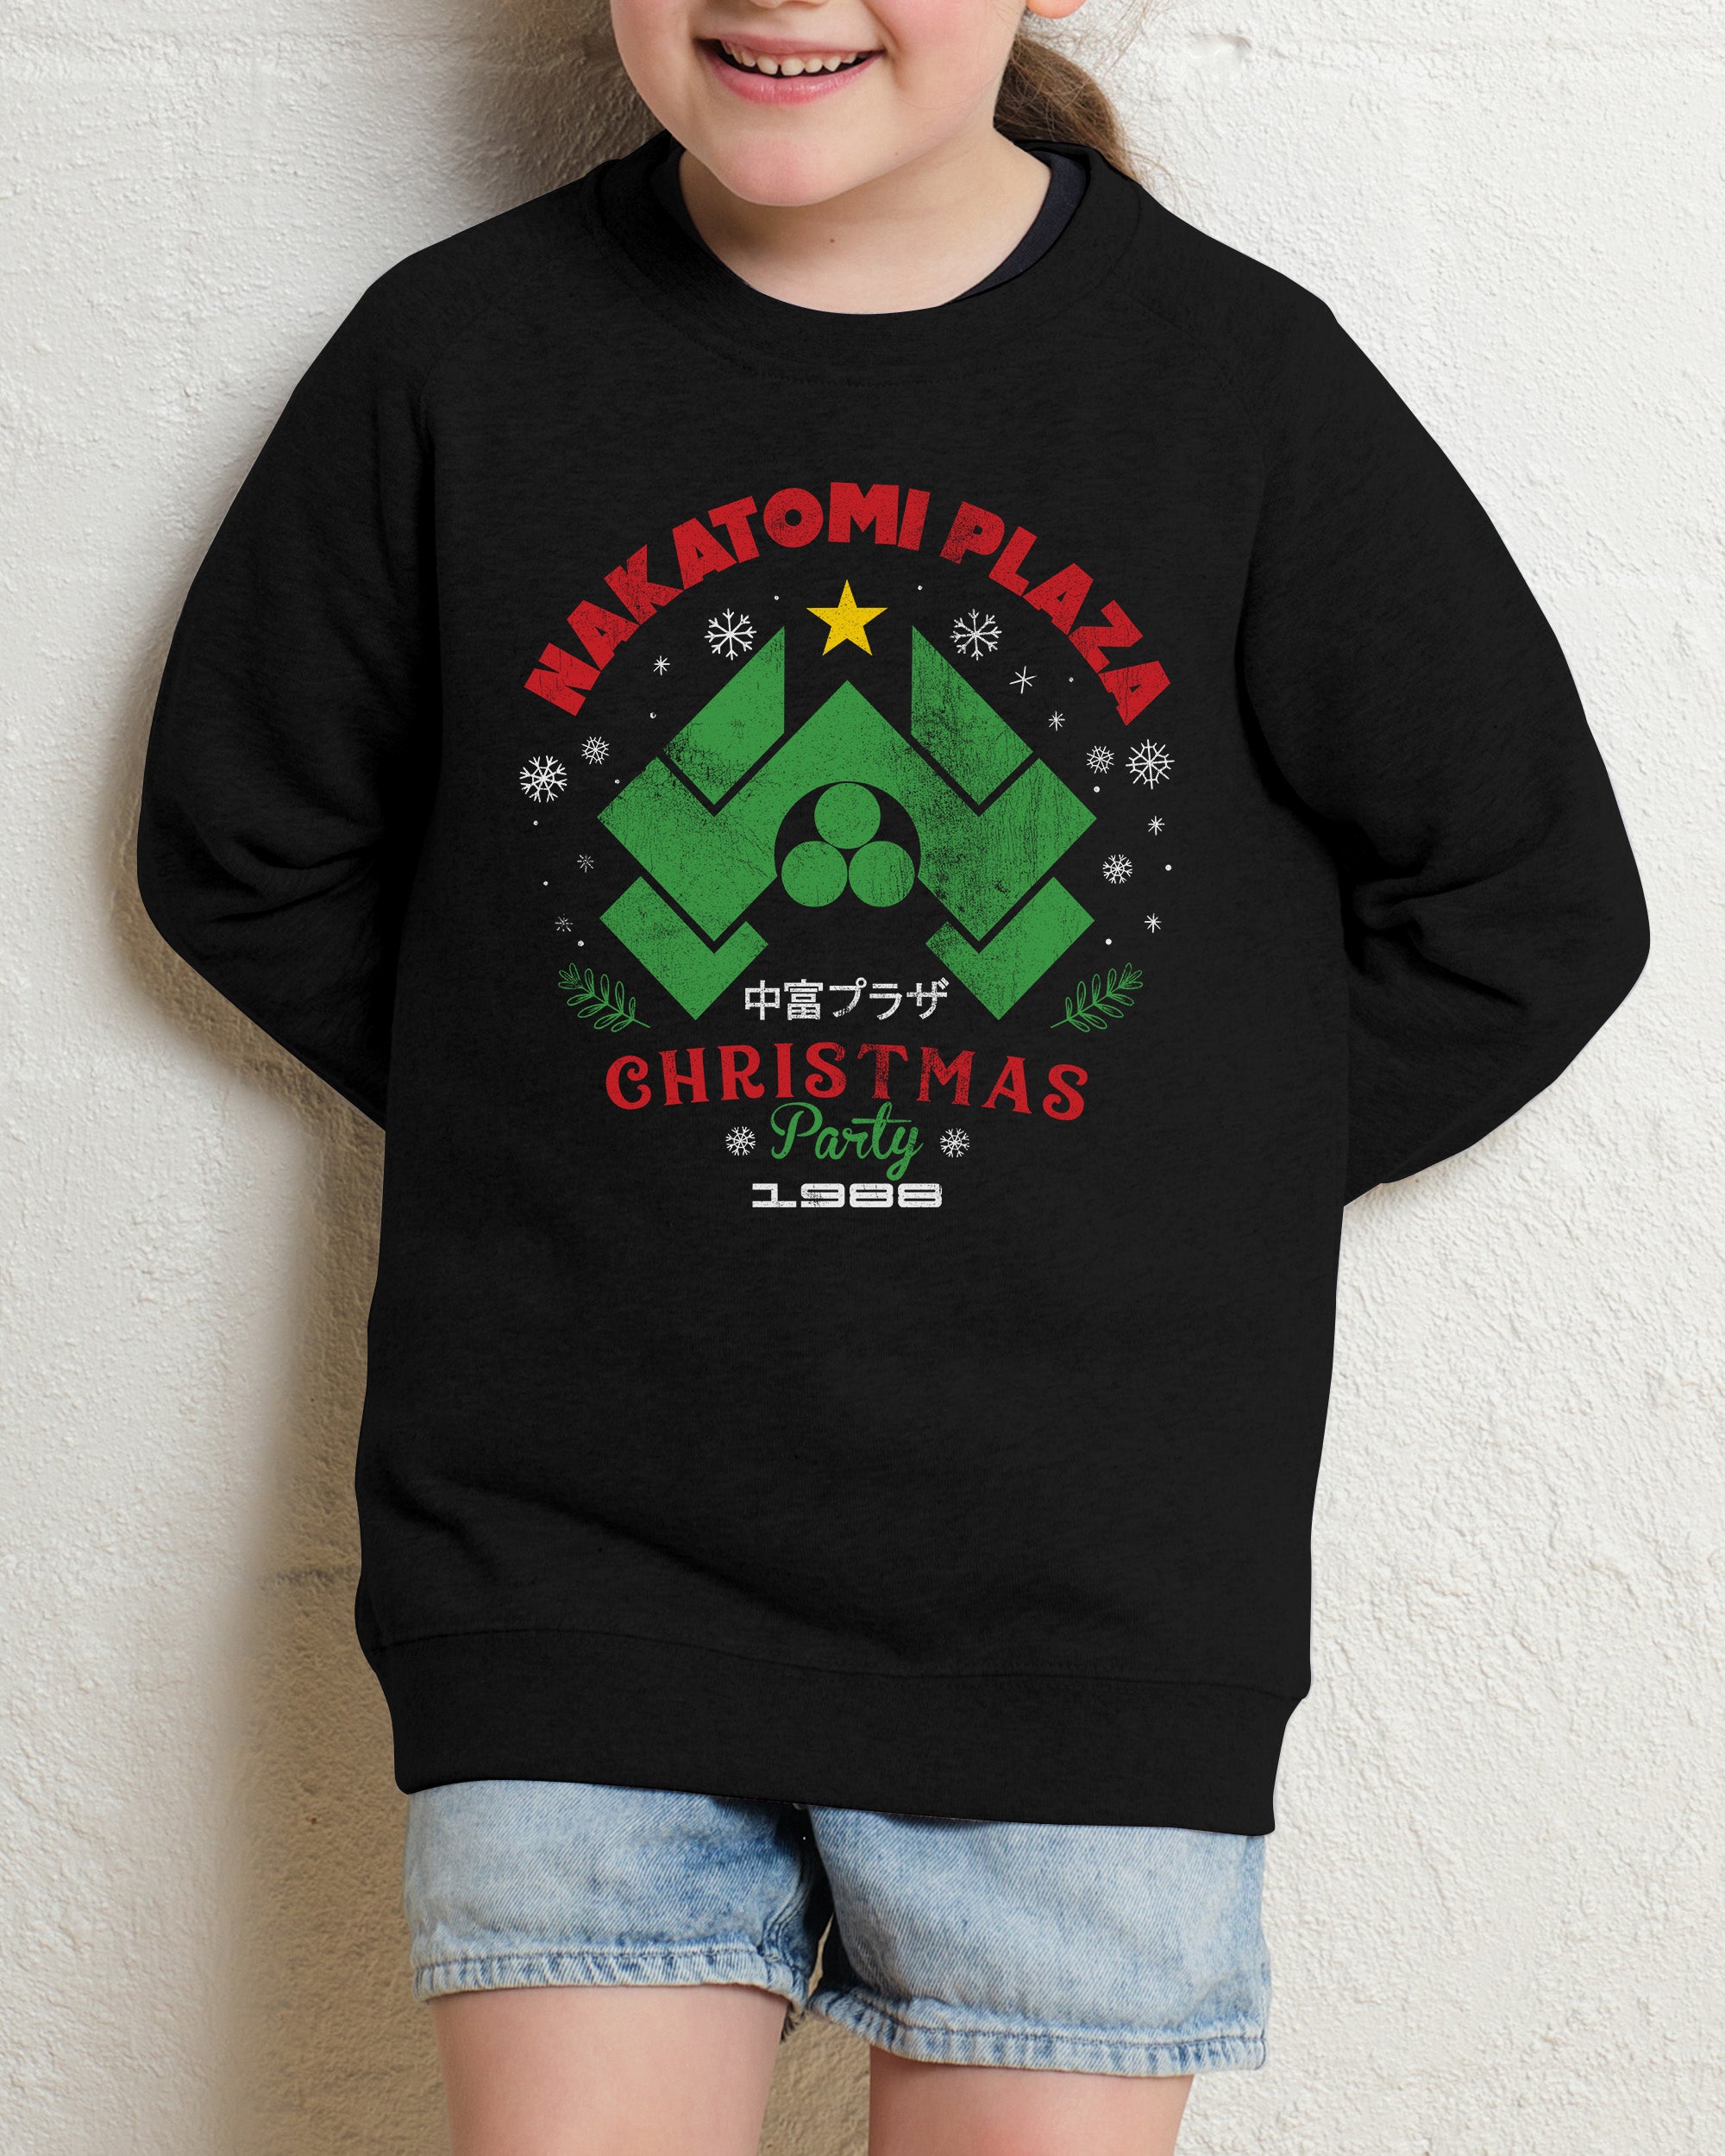 Nakatomi Christmas Party 1988 Kids Sweater Australia Online